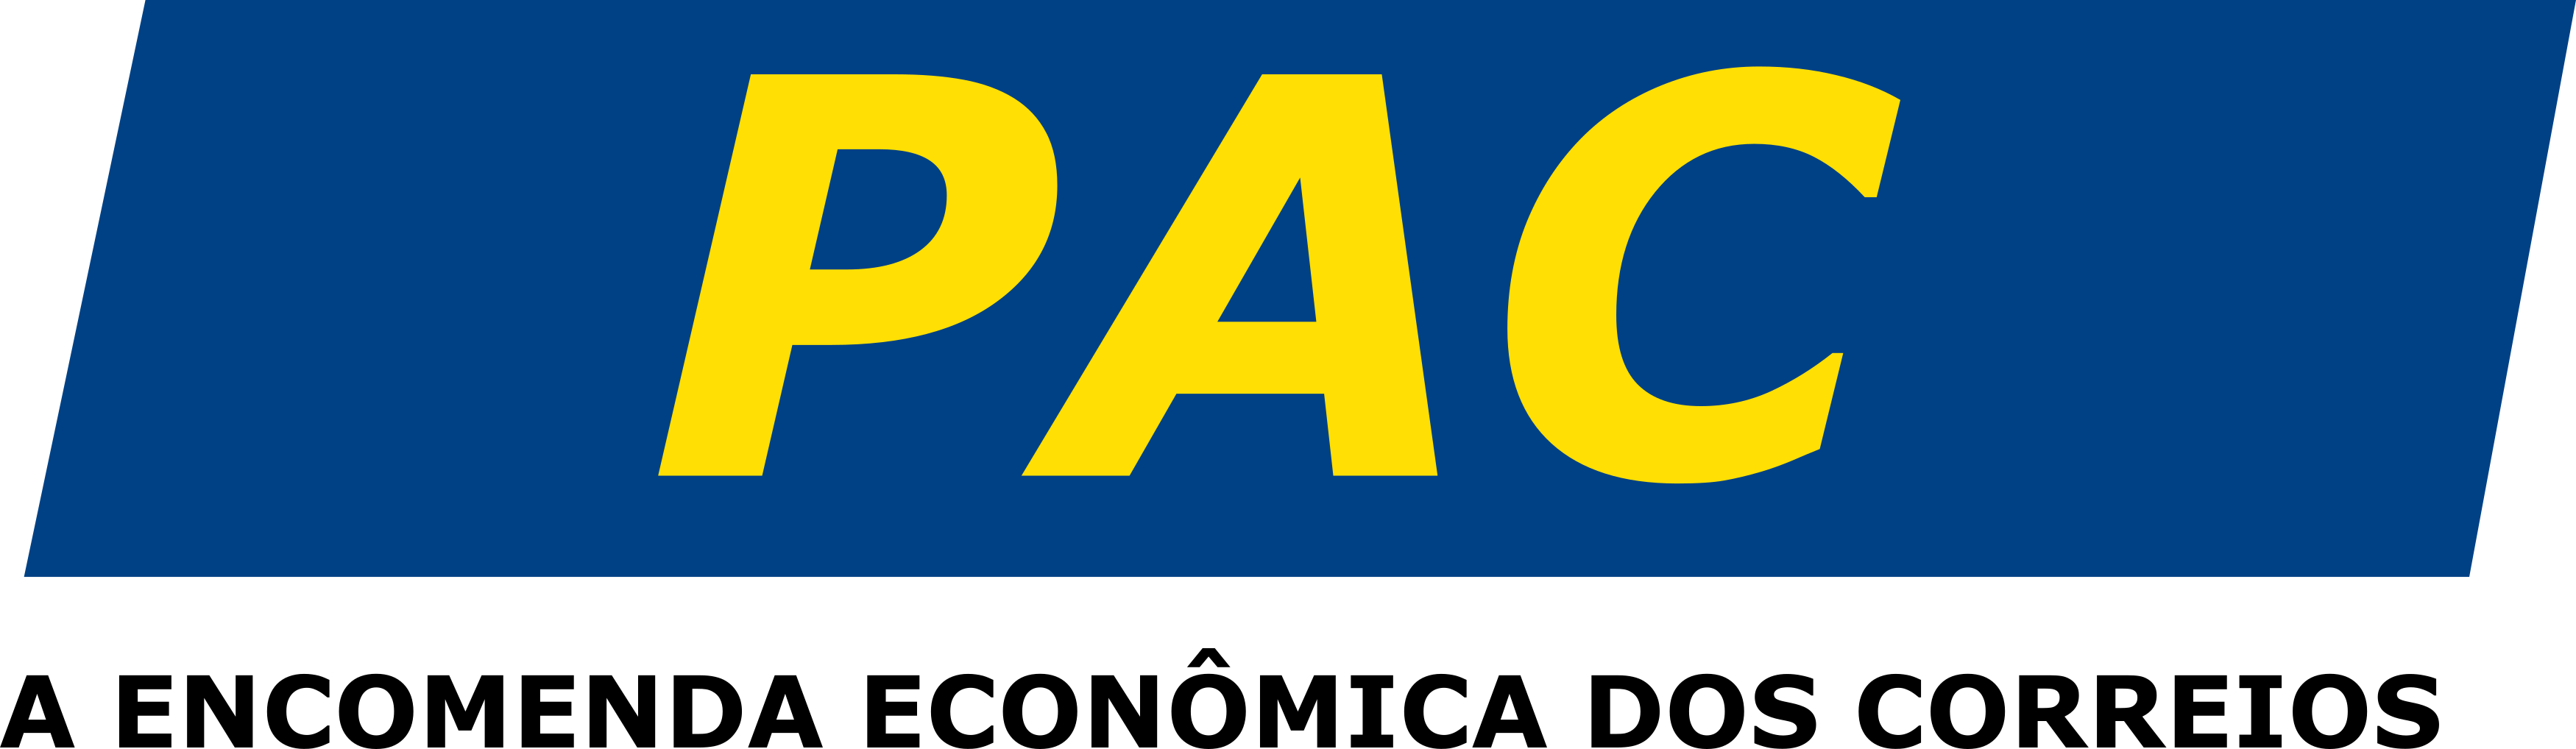 pac correios logo - PAC Correios Logo